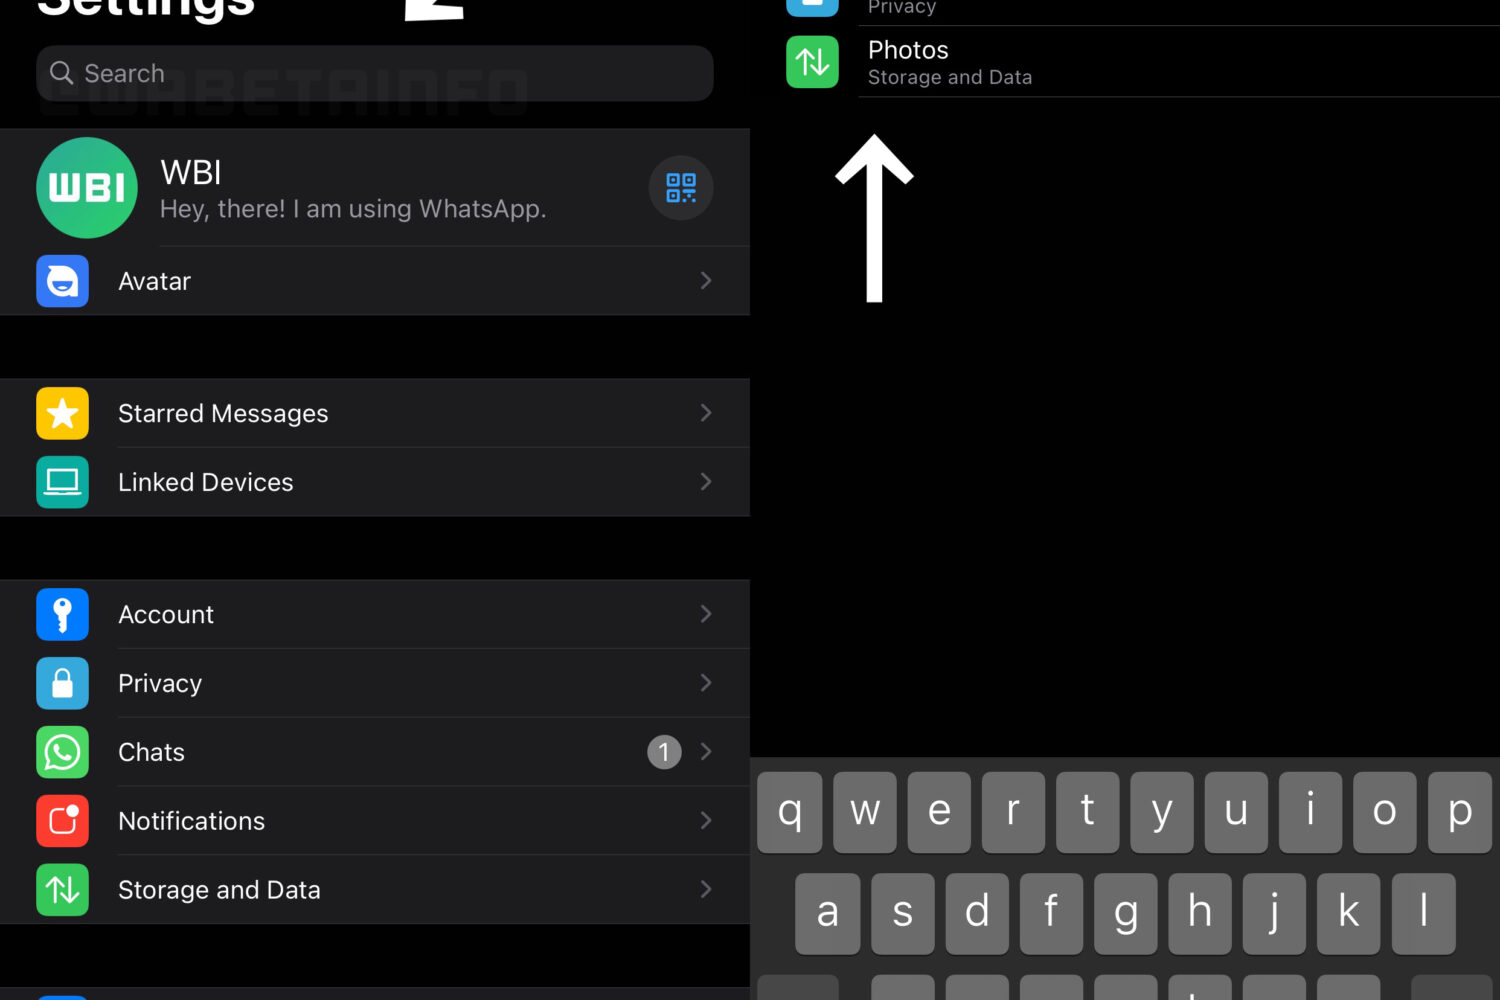 Using WhatsApp settings search on iPhone